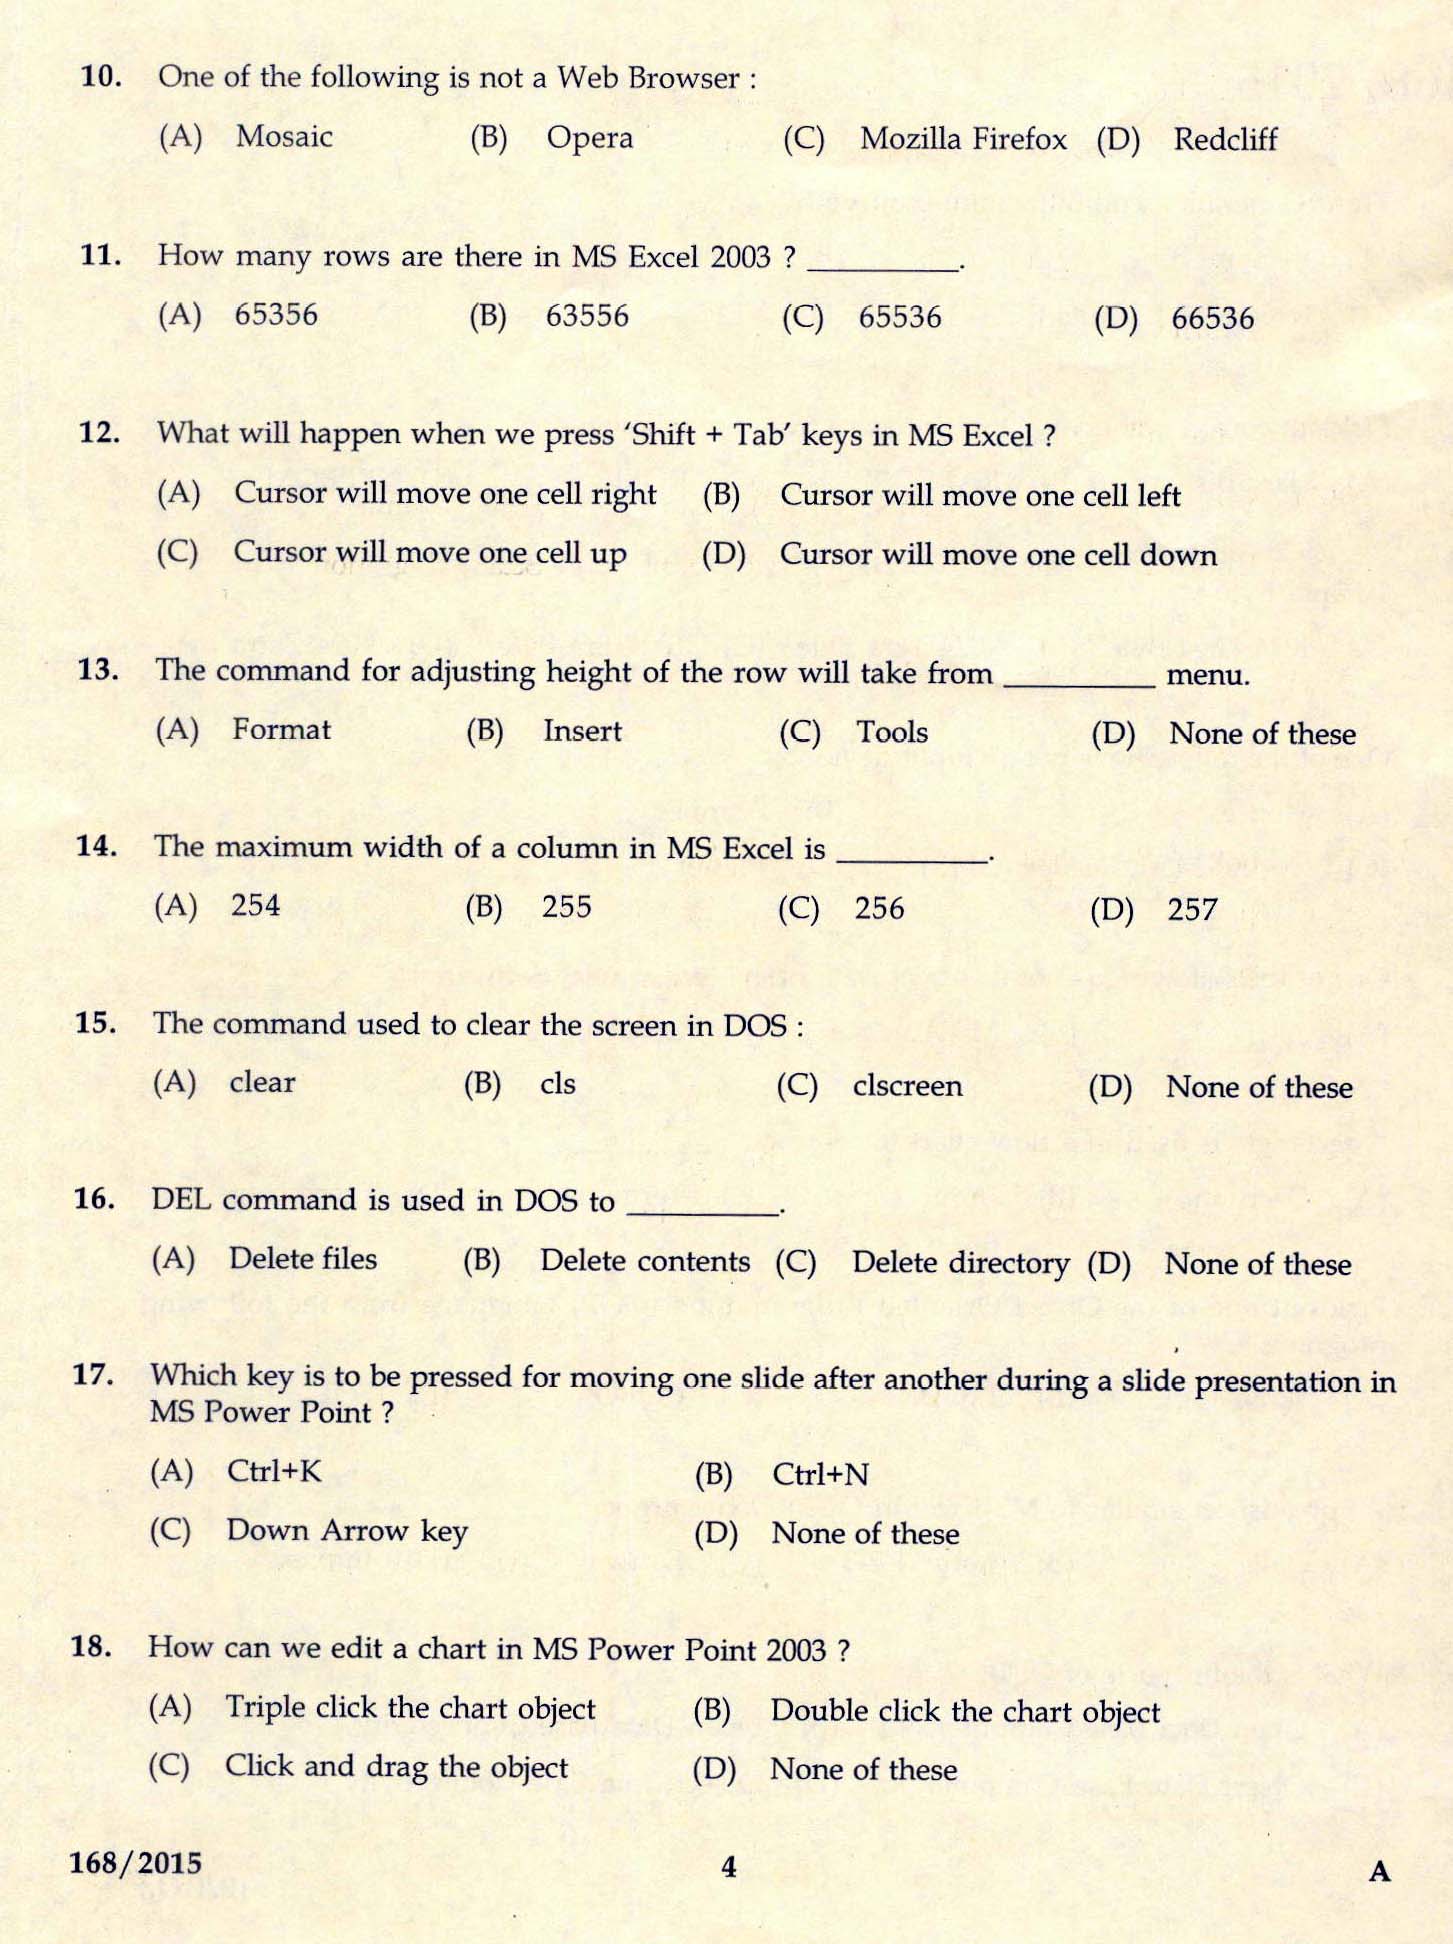 Kerala PSC Confidential Assistant Grade II Kerala Water Authority Exam 2015 Question Paper Code 1682015 2